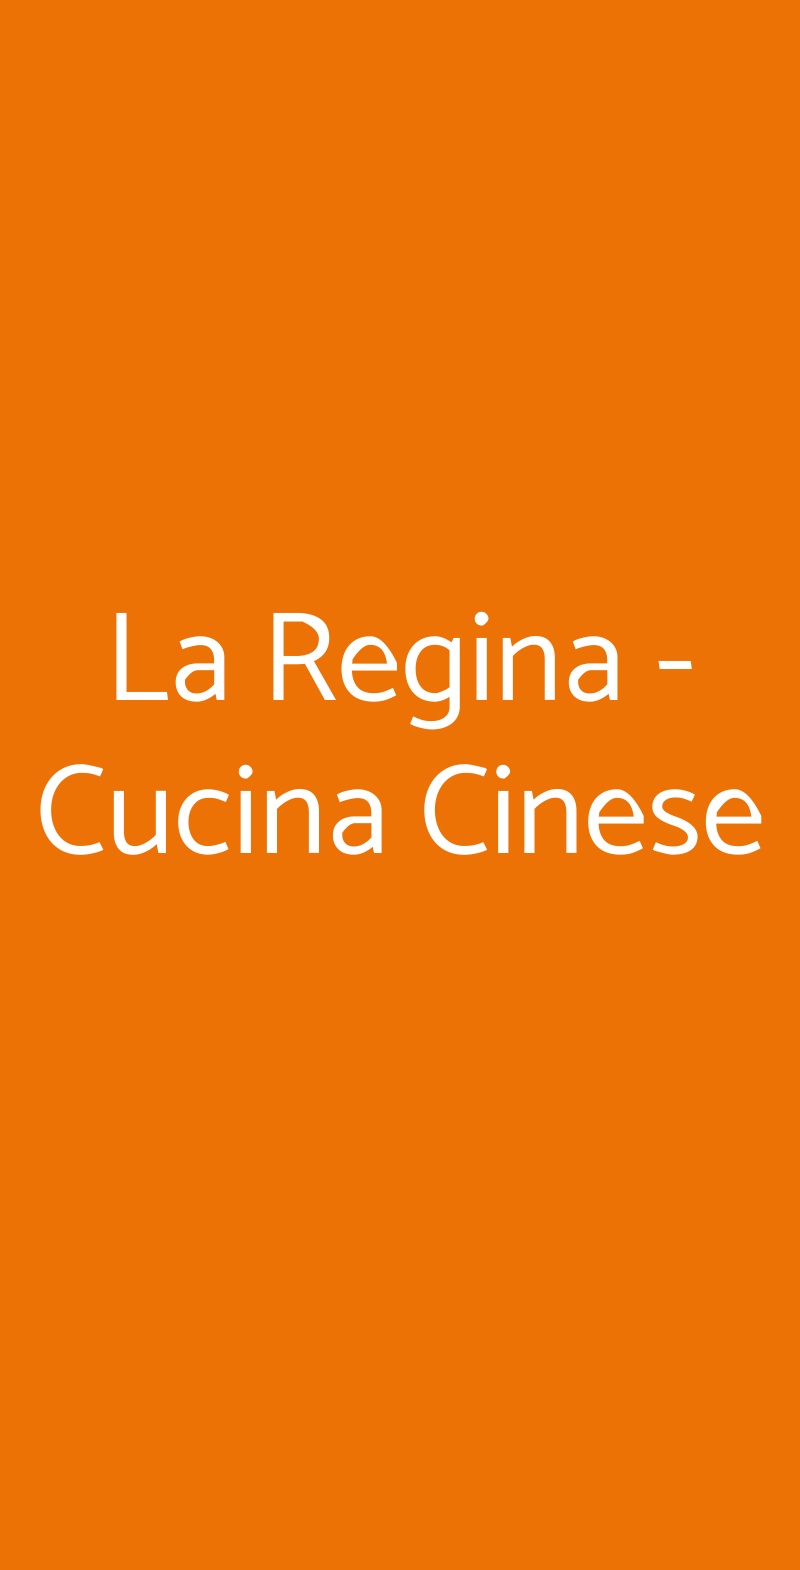 La Regina - Cucina Cinese Roma menù 1 pagina